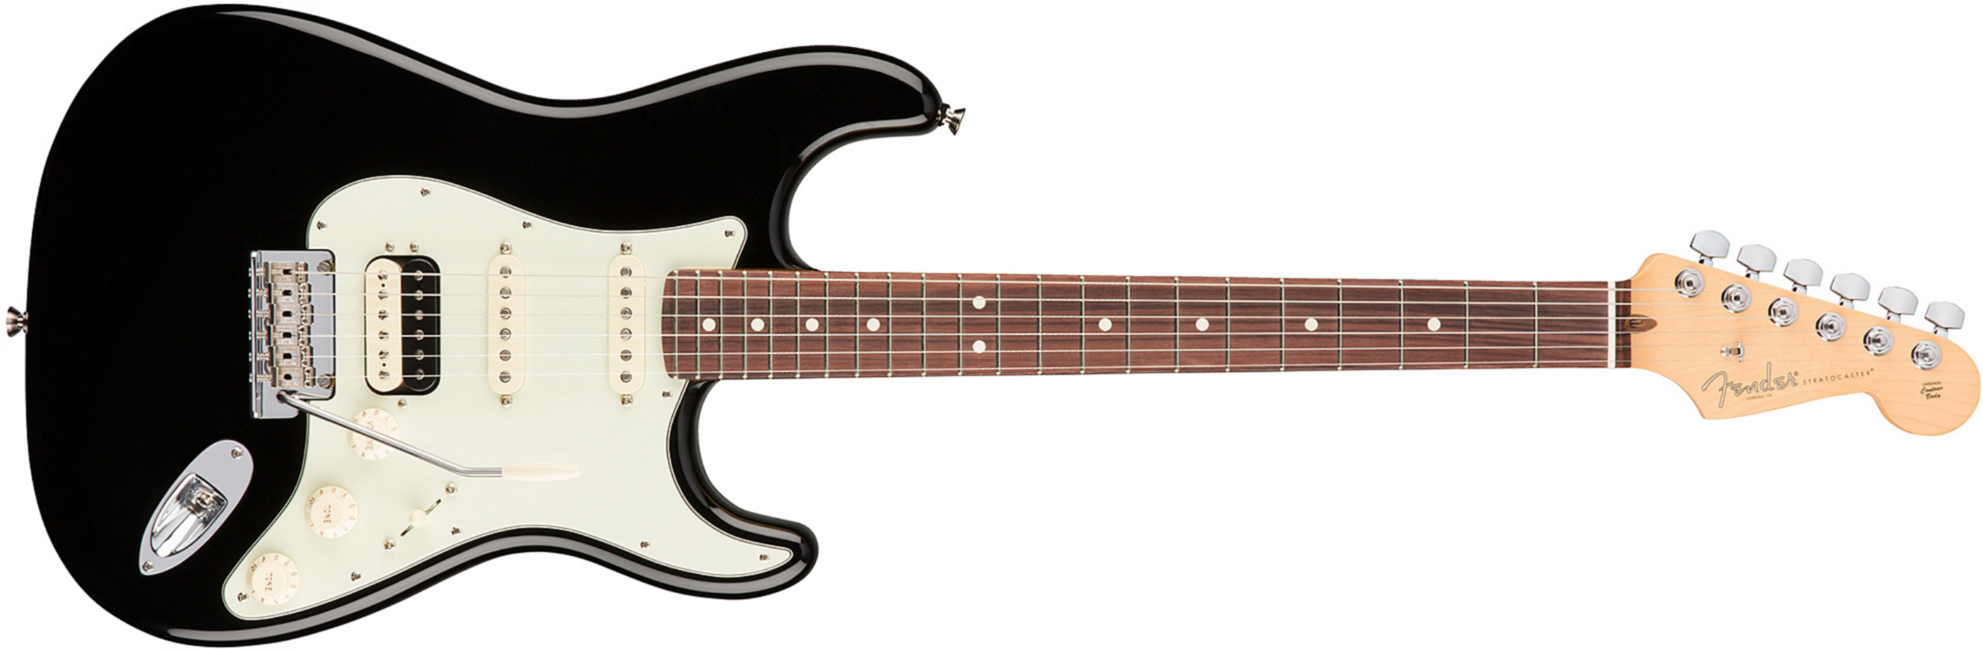 Fender Strat Hss Shawbucker American Professional Usa Rw - Black - Guitare Électrique 12 Cordes - Main picture